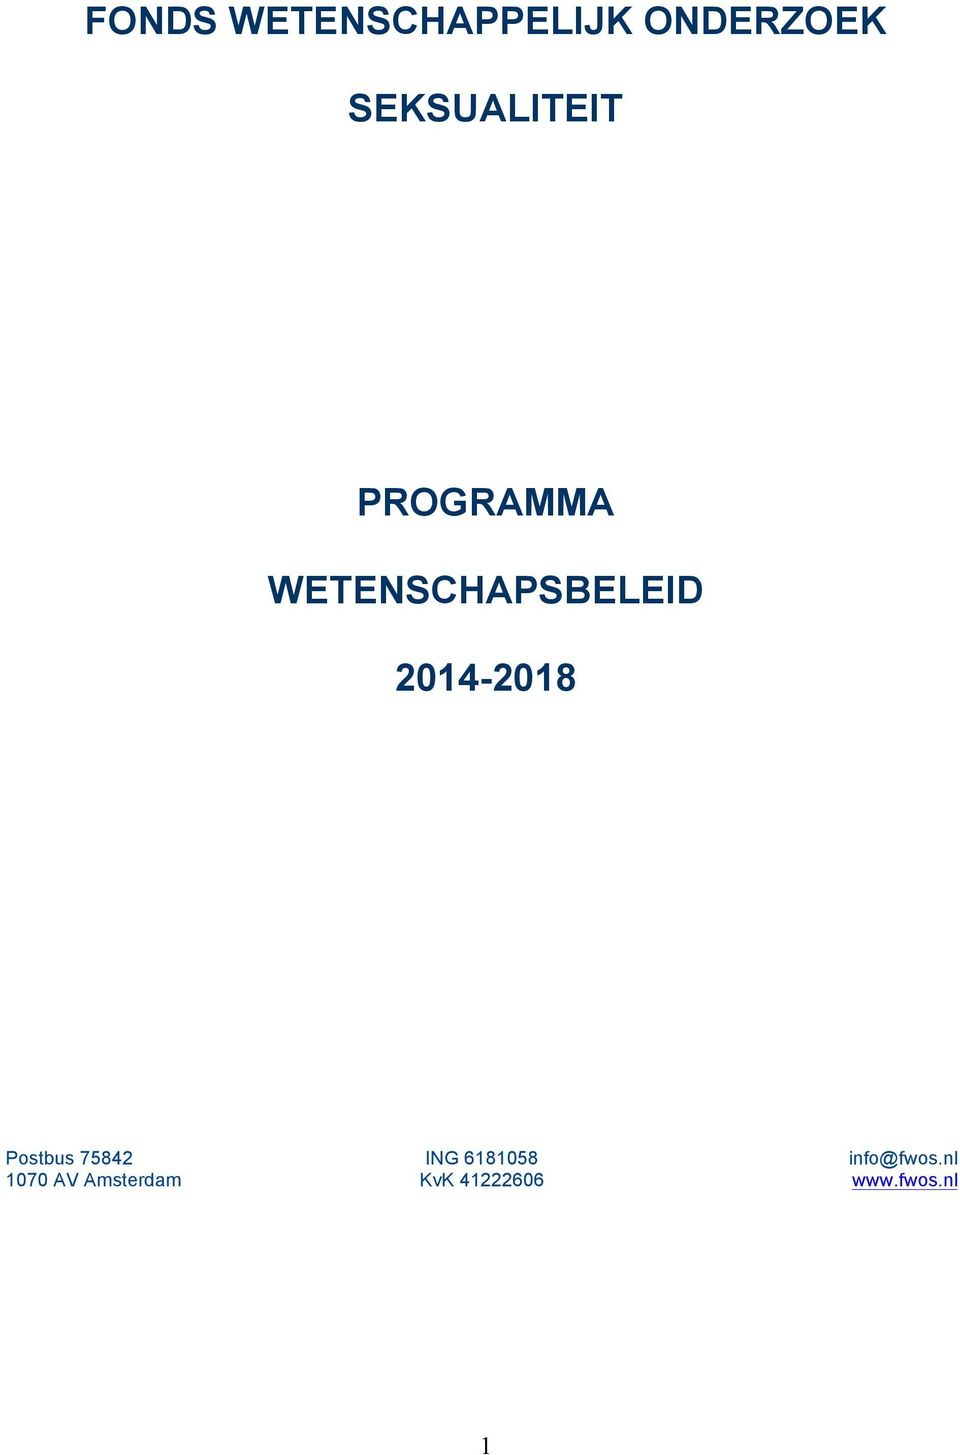 2014-2018 Postbus 75842 1070 AV Amsterdam